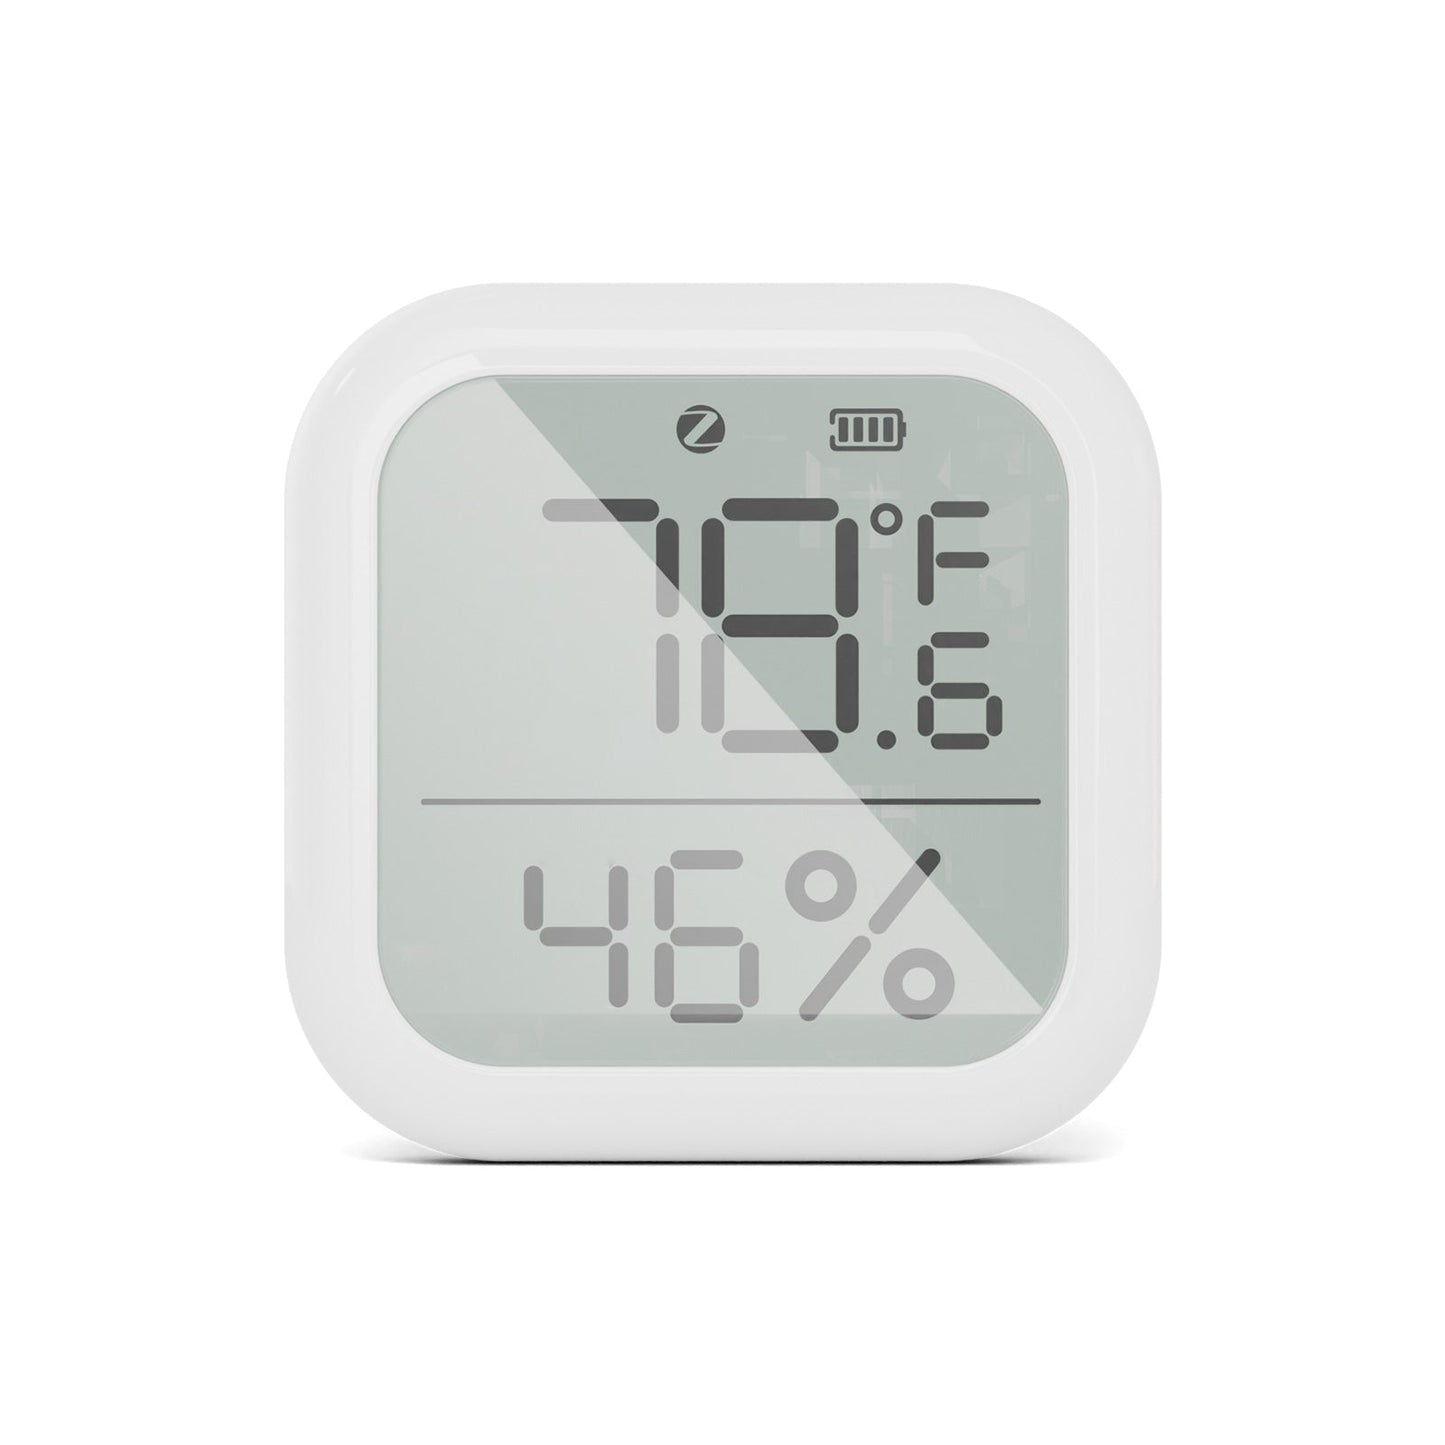 Digital ZigBee Smart/WiFi Hygrometer Thermometer Detector LCD Display  Remote